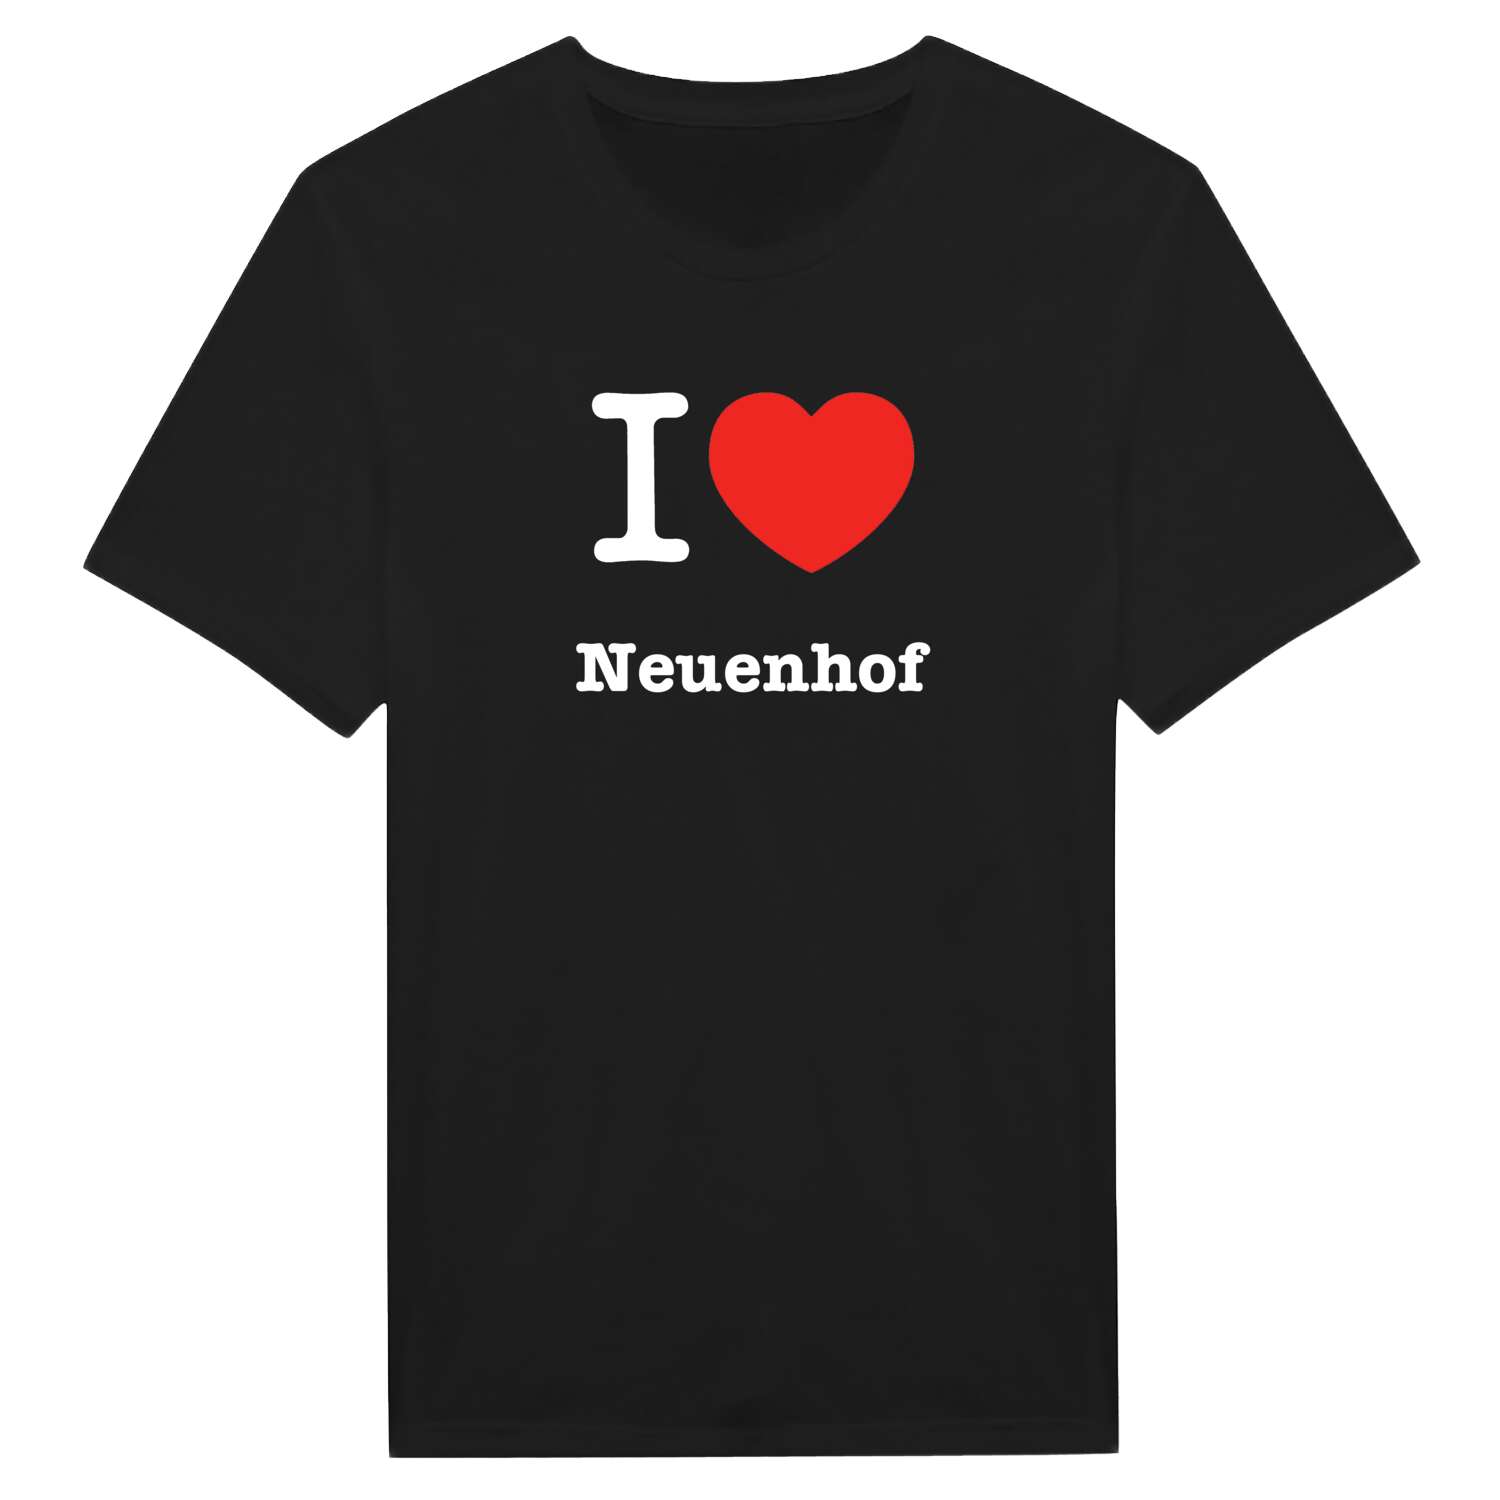 Neuenhof T-Shirt »I love«